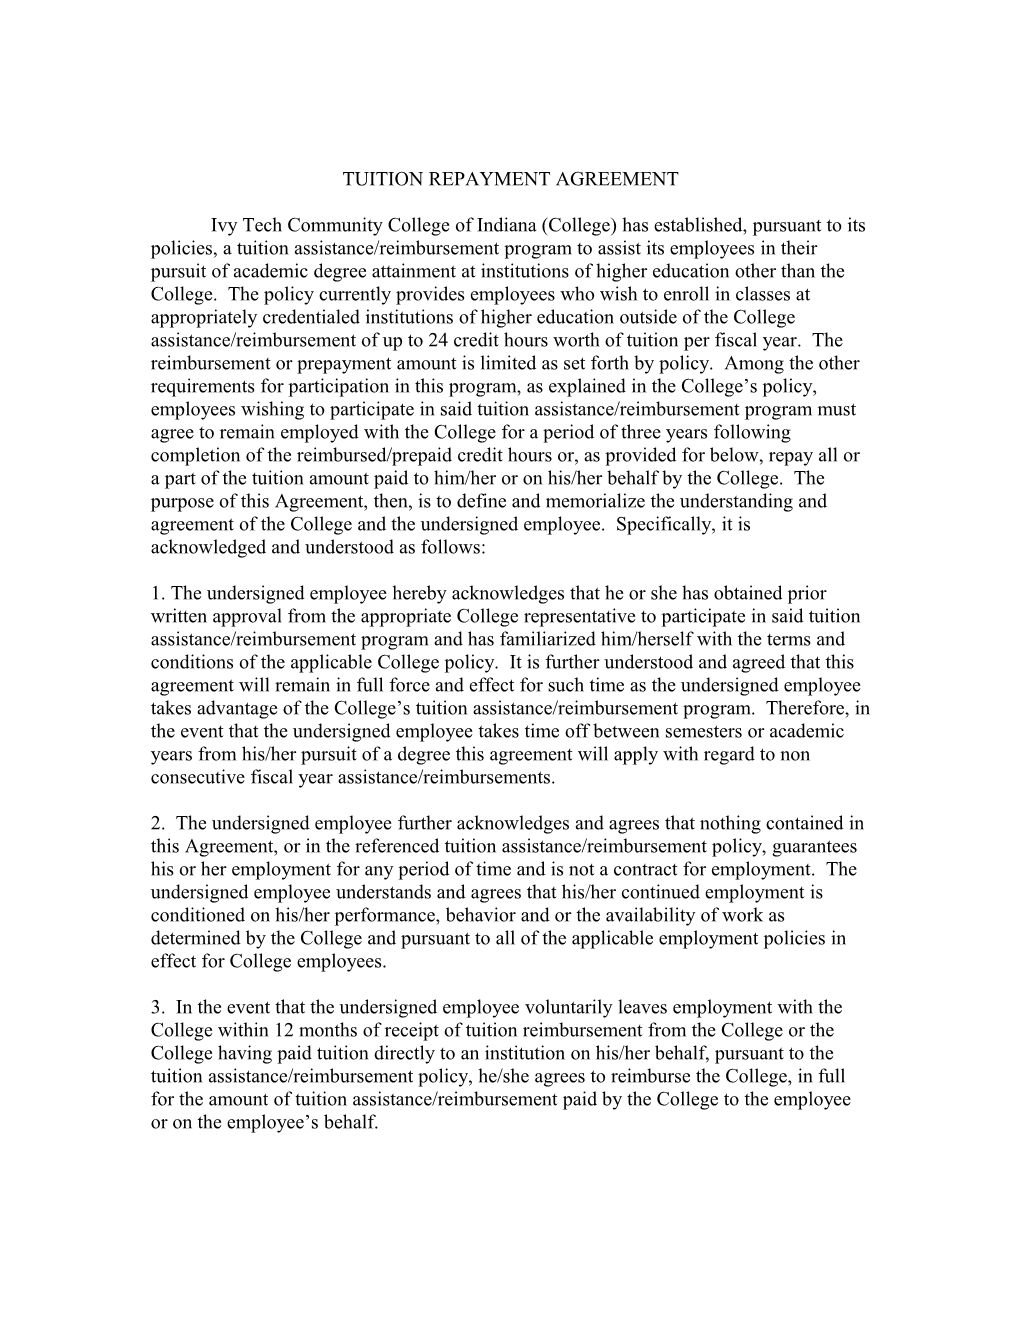 Tuition Reimbursement Repayment Agreement